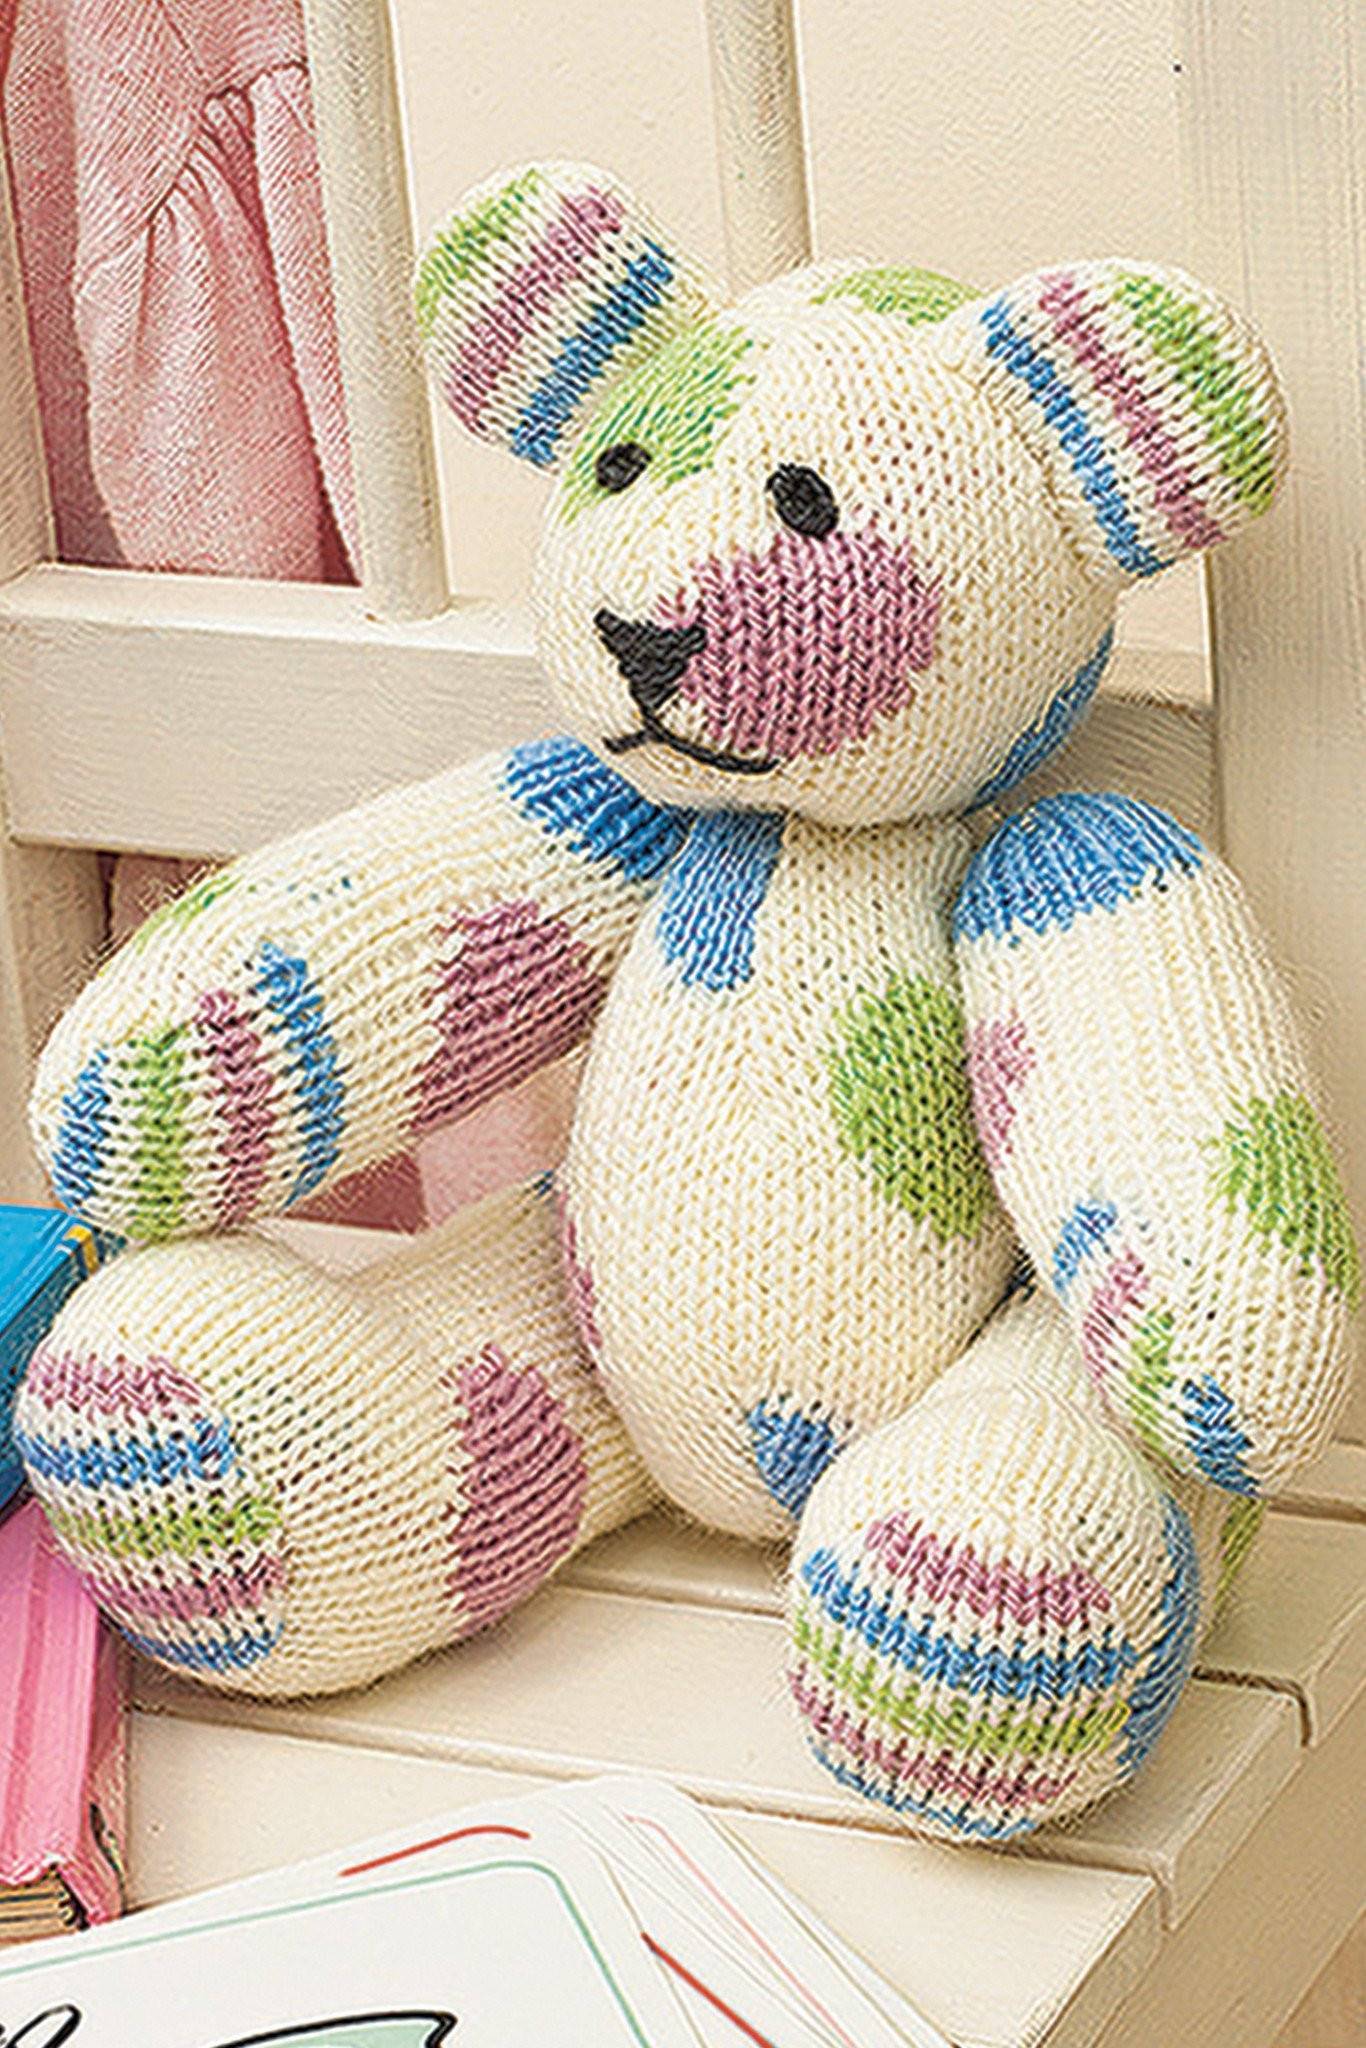 Patterned Teddy Bear Make Knitting Pattern | The Knitting Network